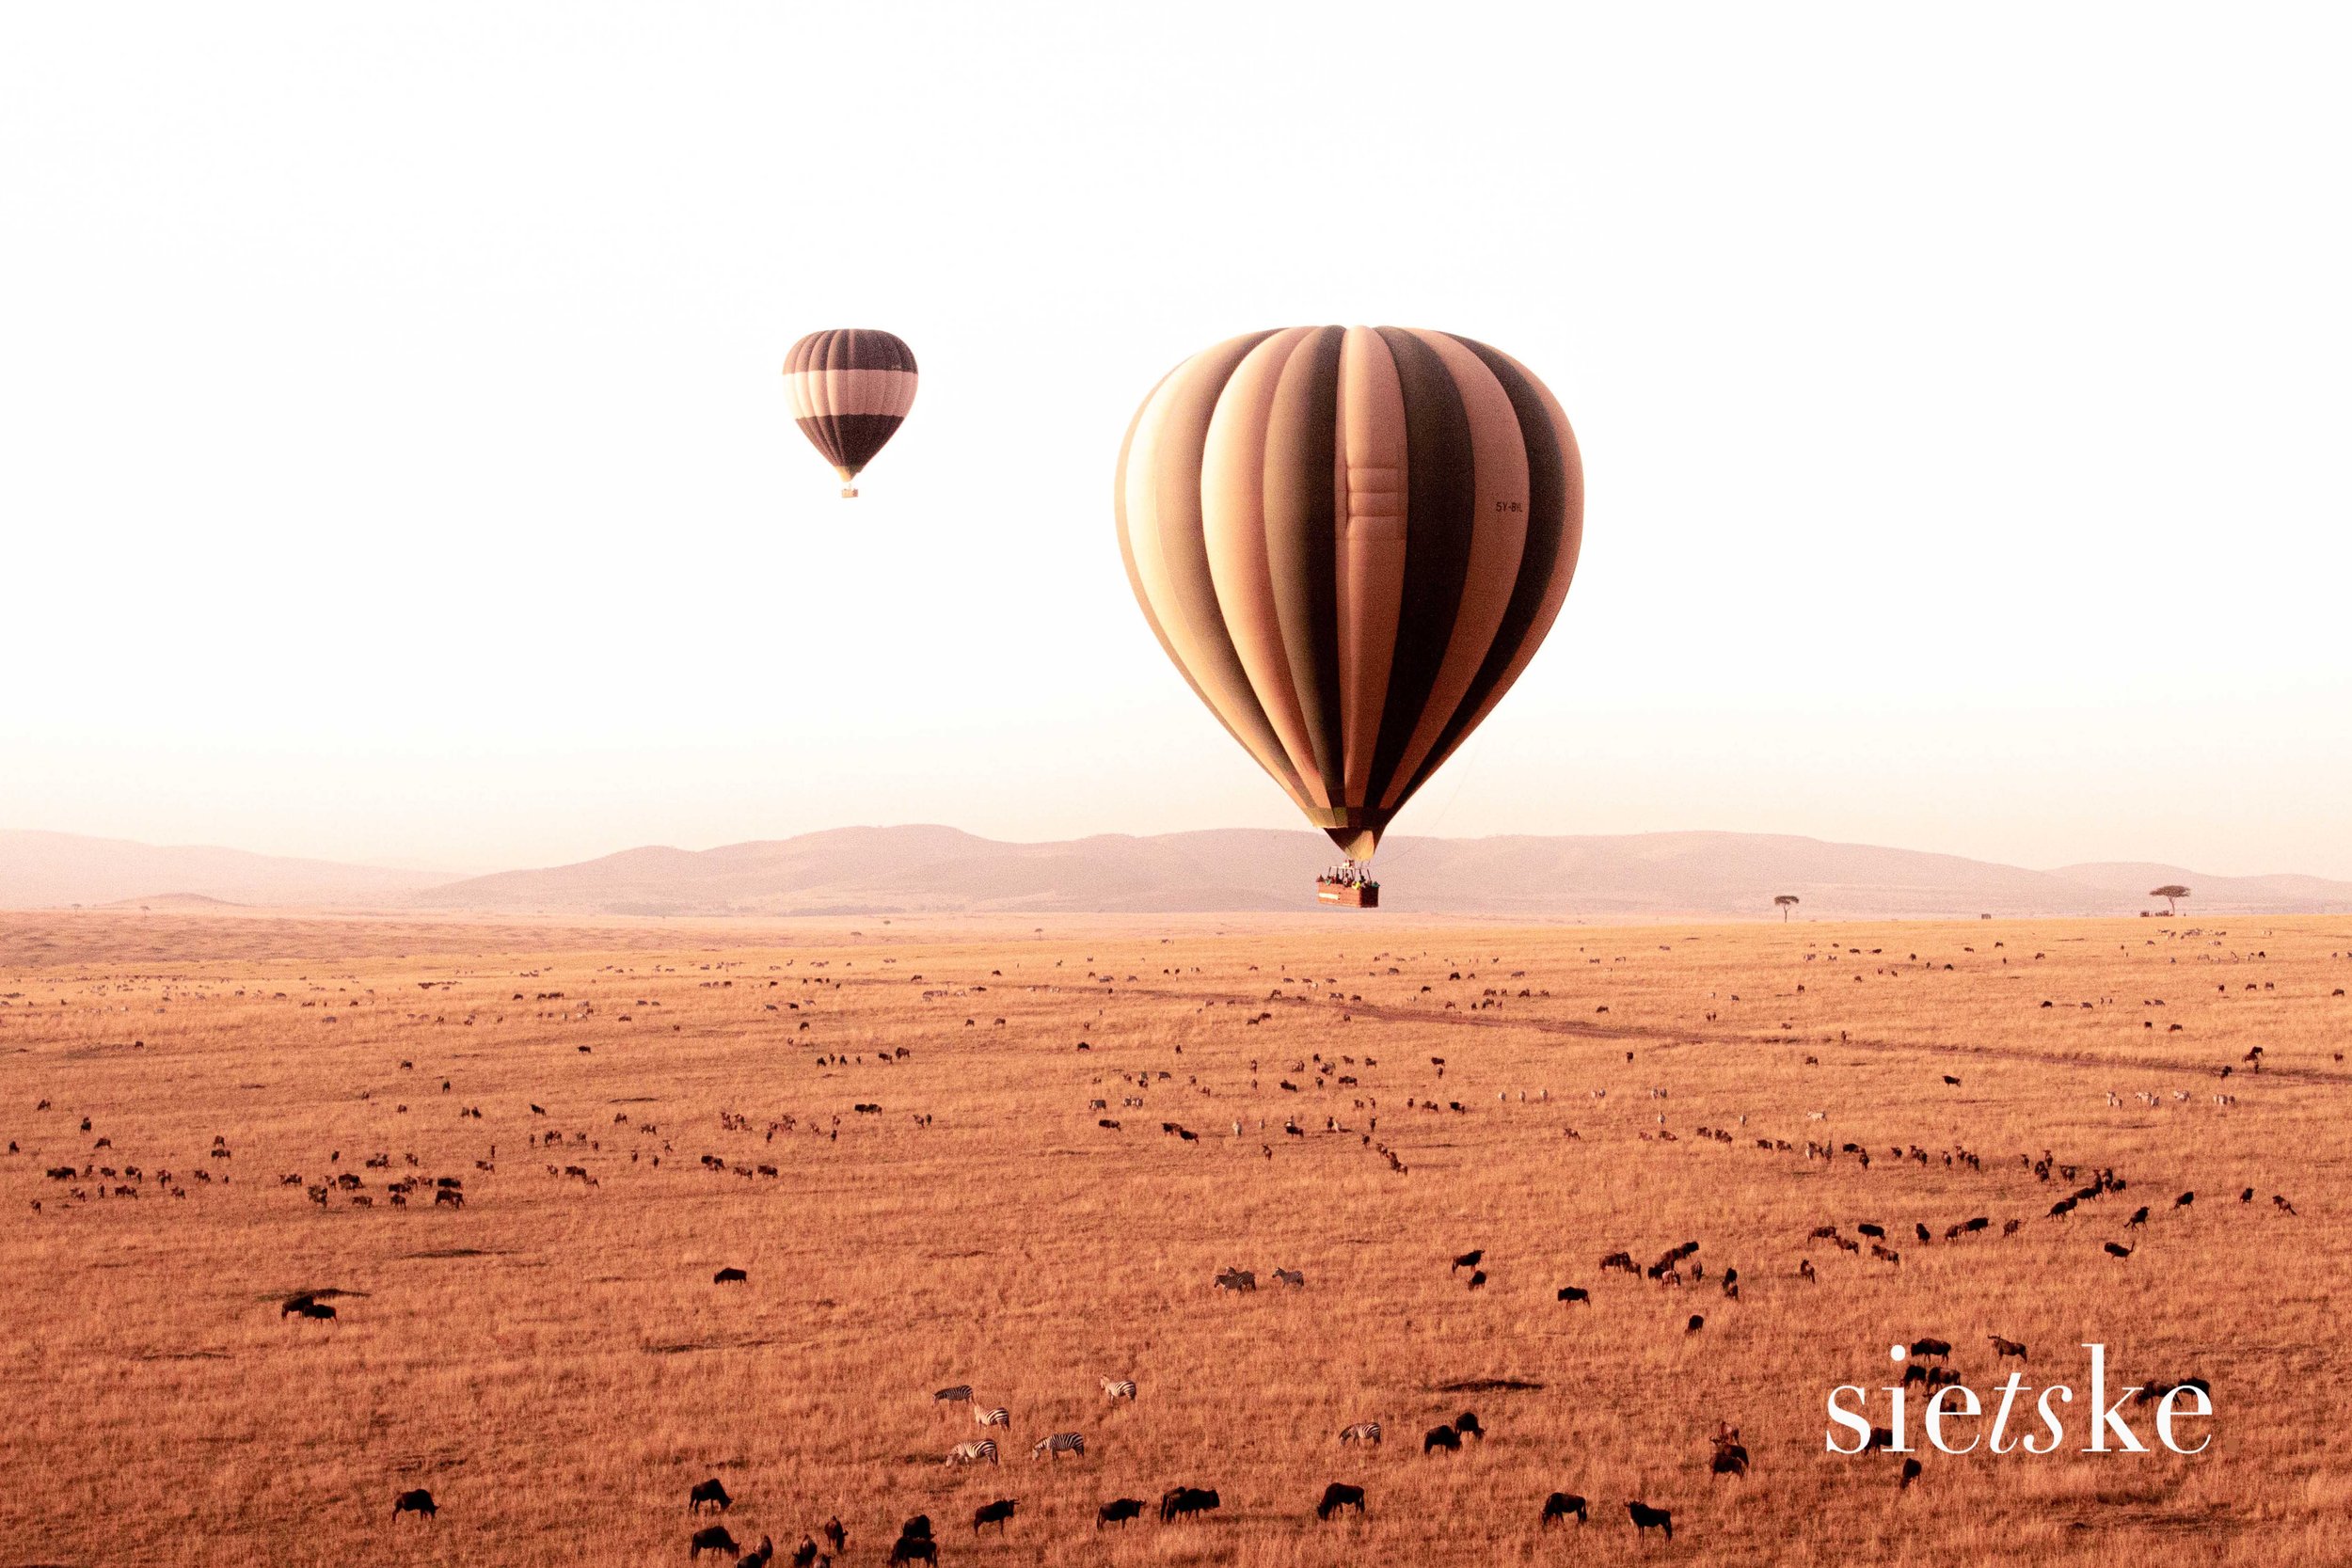 Sietske | Balloon | Screensaver.jpg